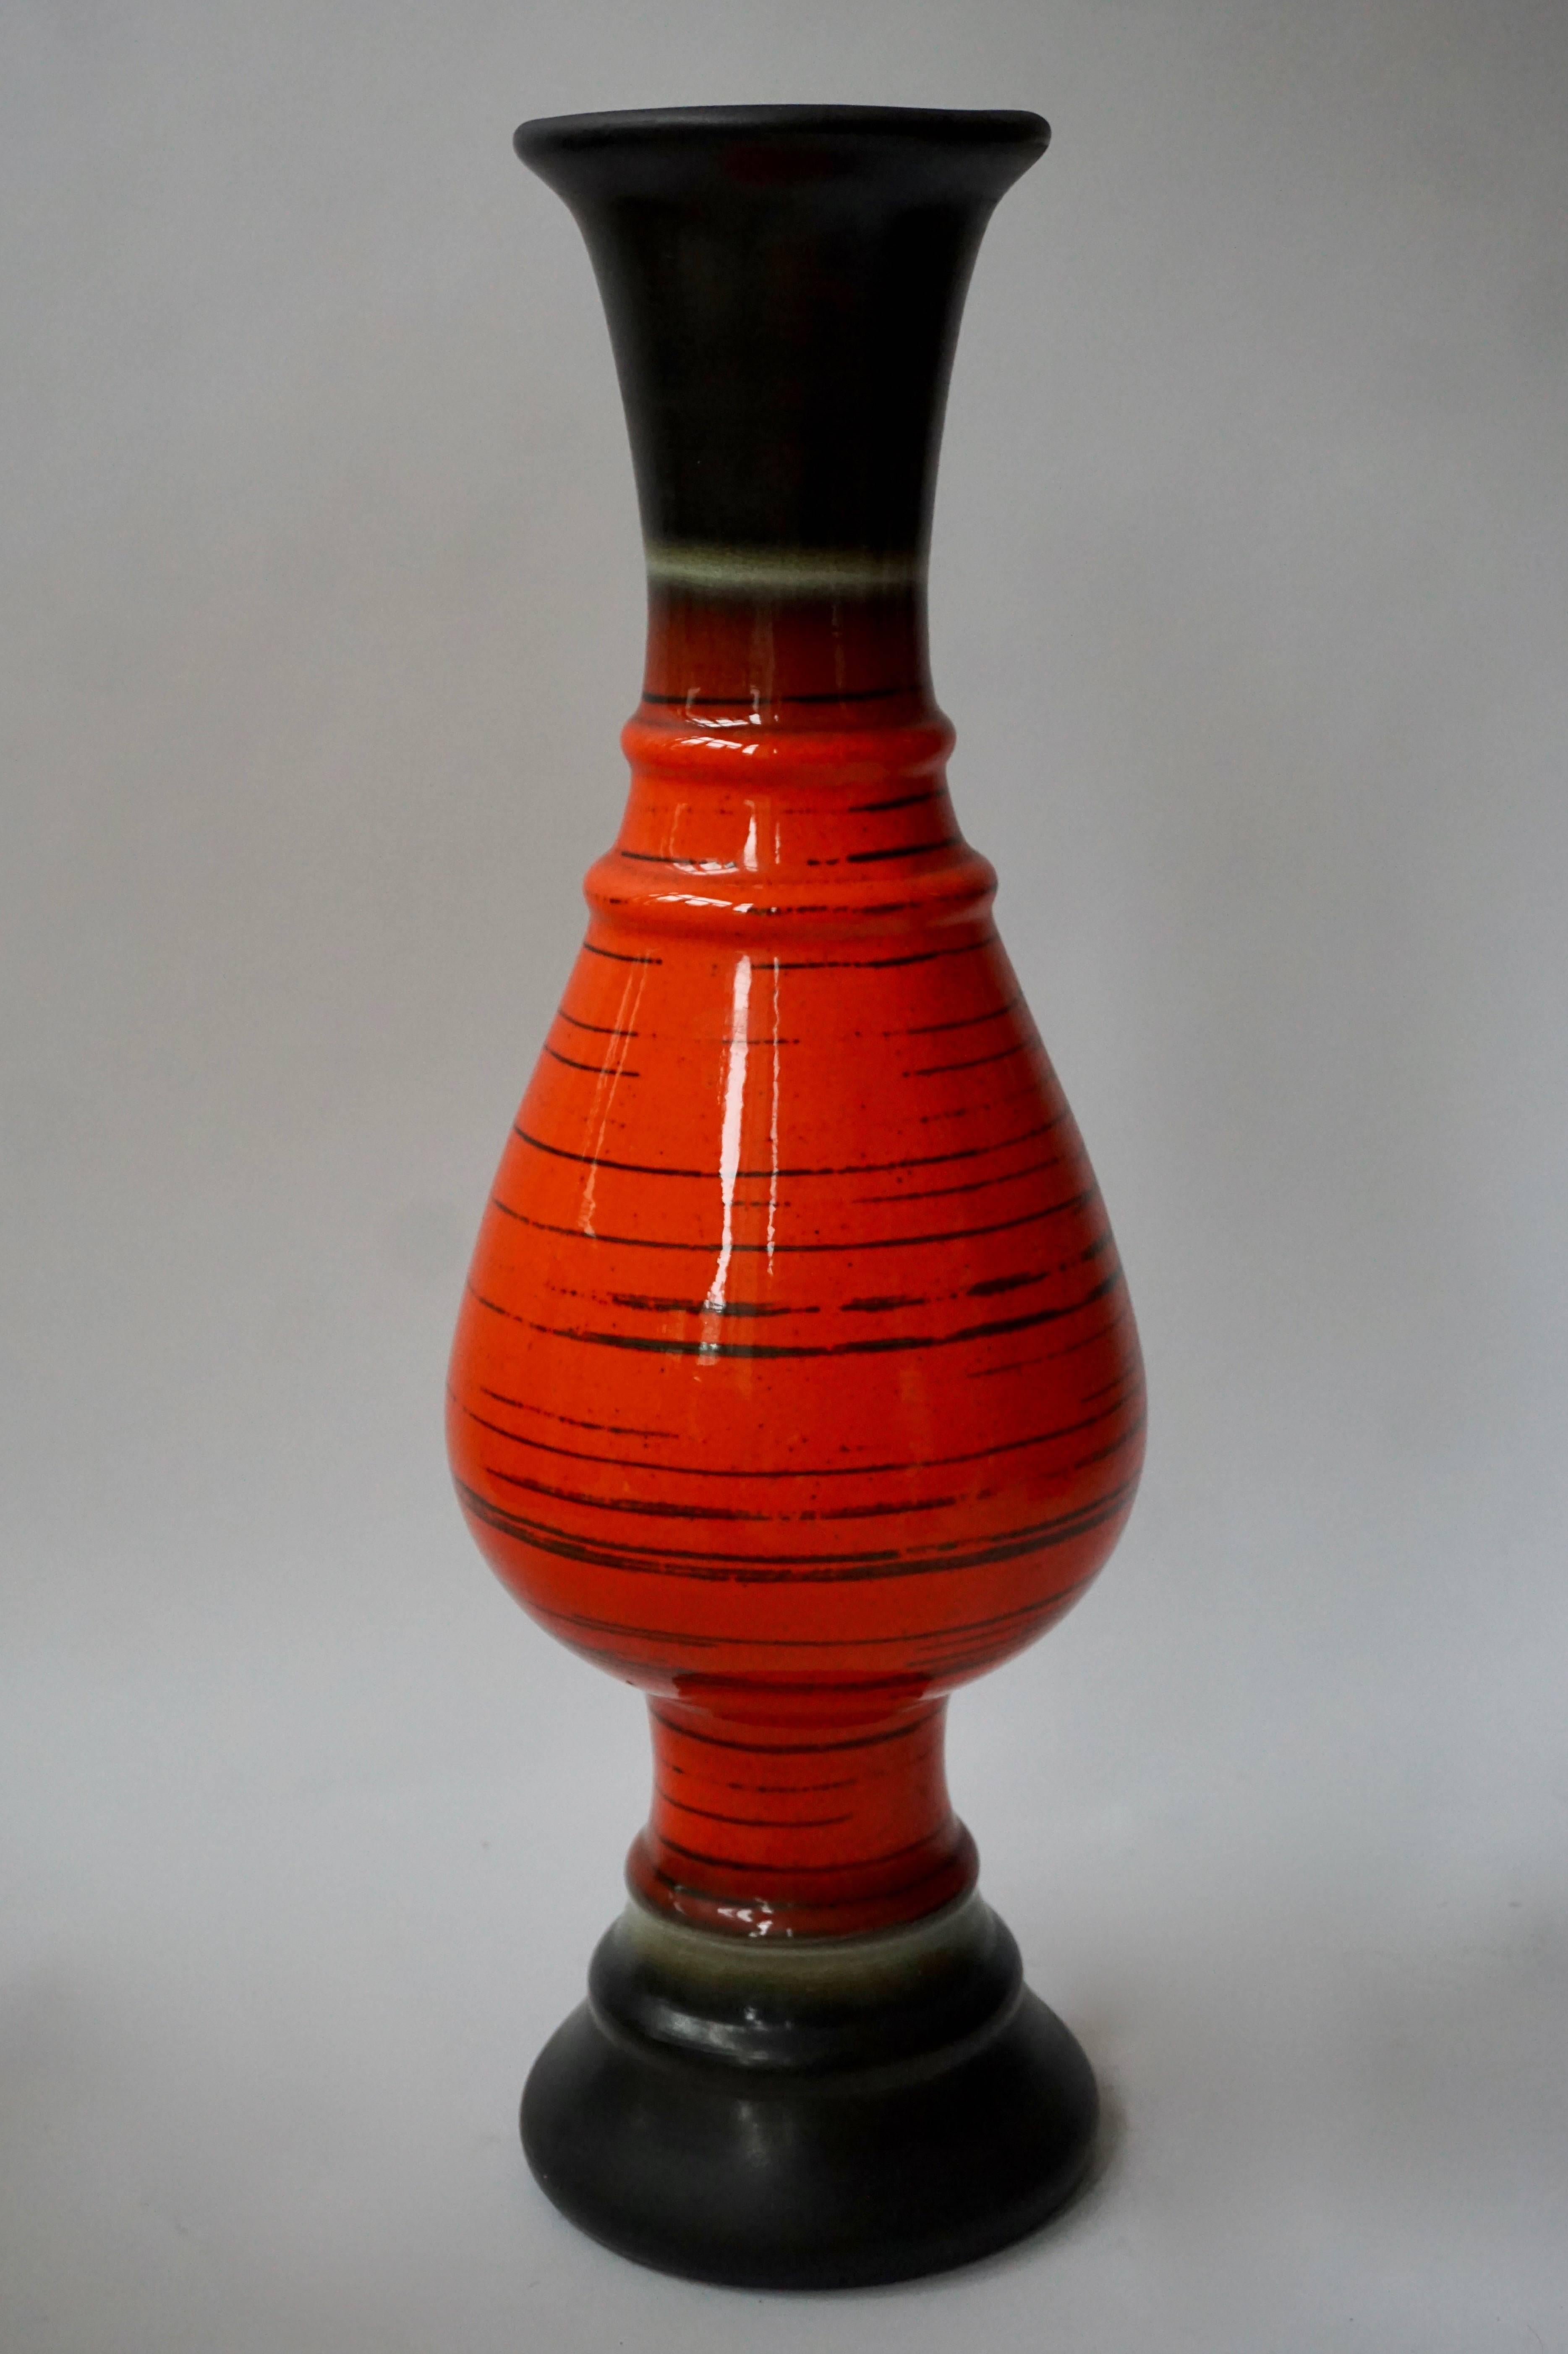 Große belgische Keramikvase.
Maße: Durchmesser 20 cm.
höhe 60 cm.